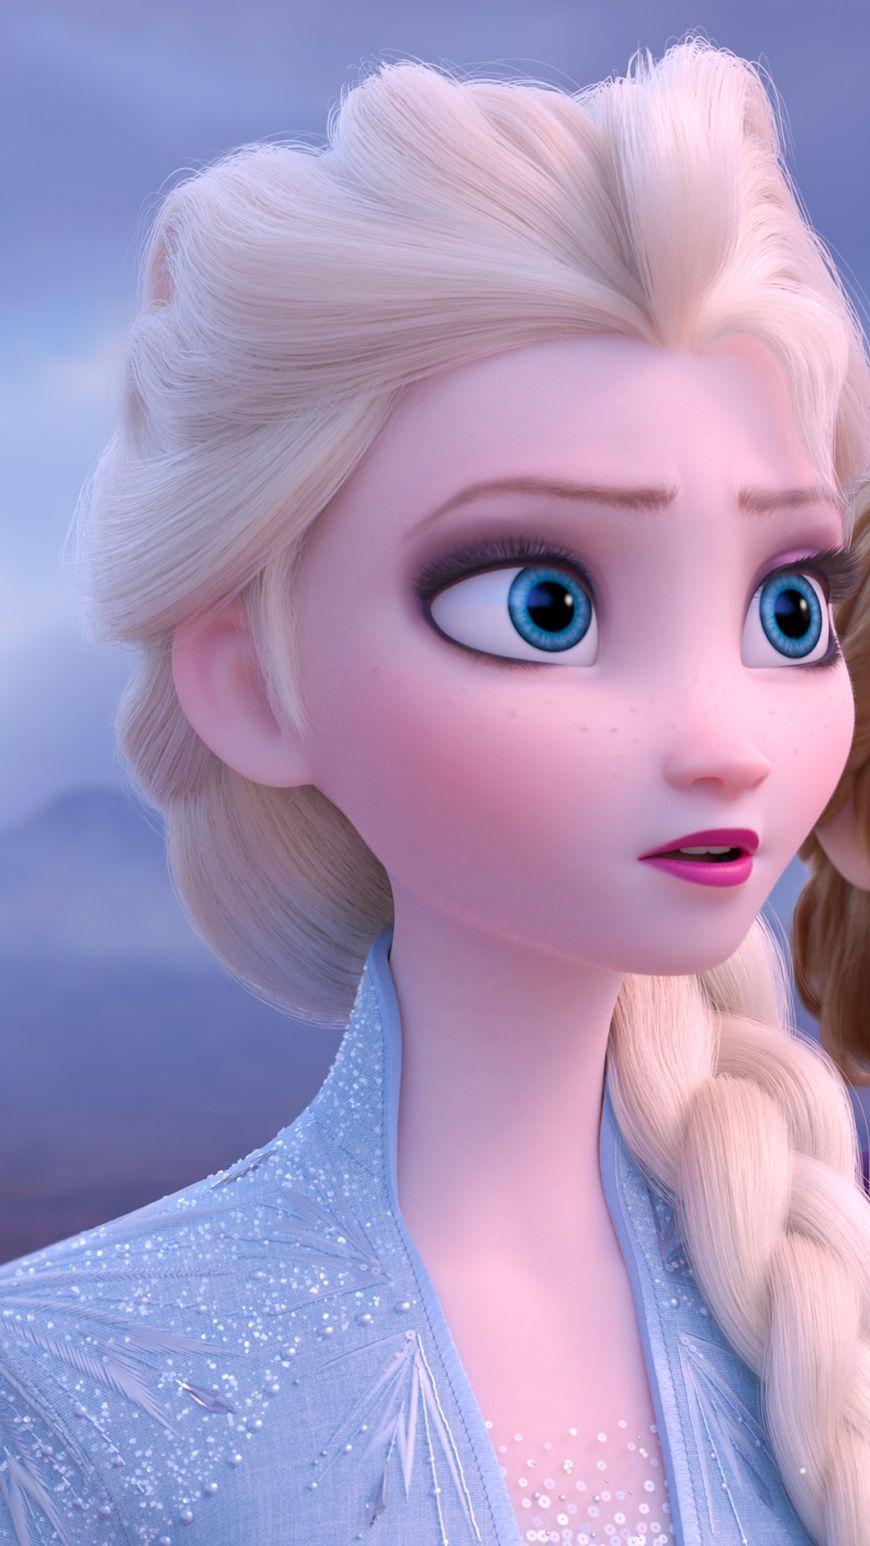 Disney Frozen 2 mobile phone wallpaper. Elsa. Disney